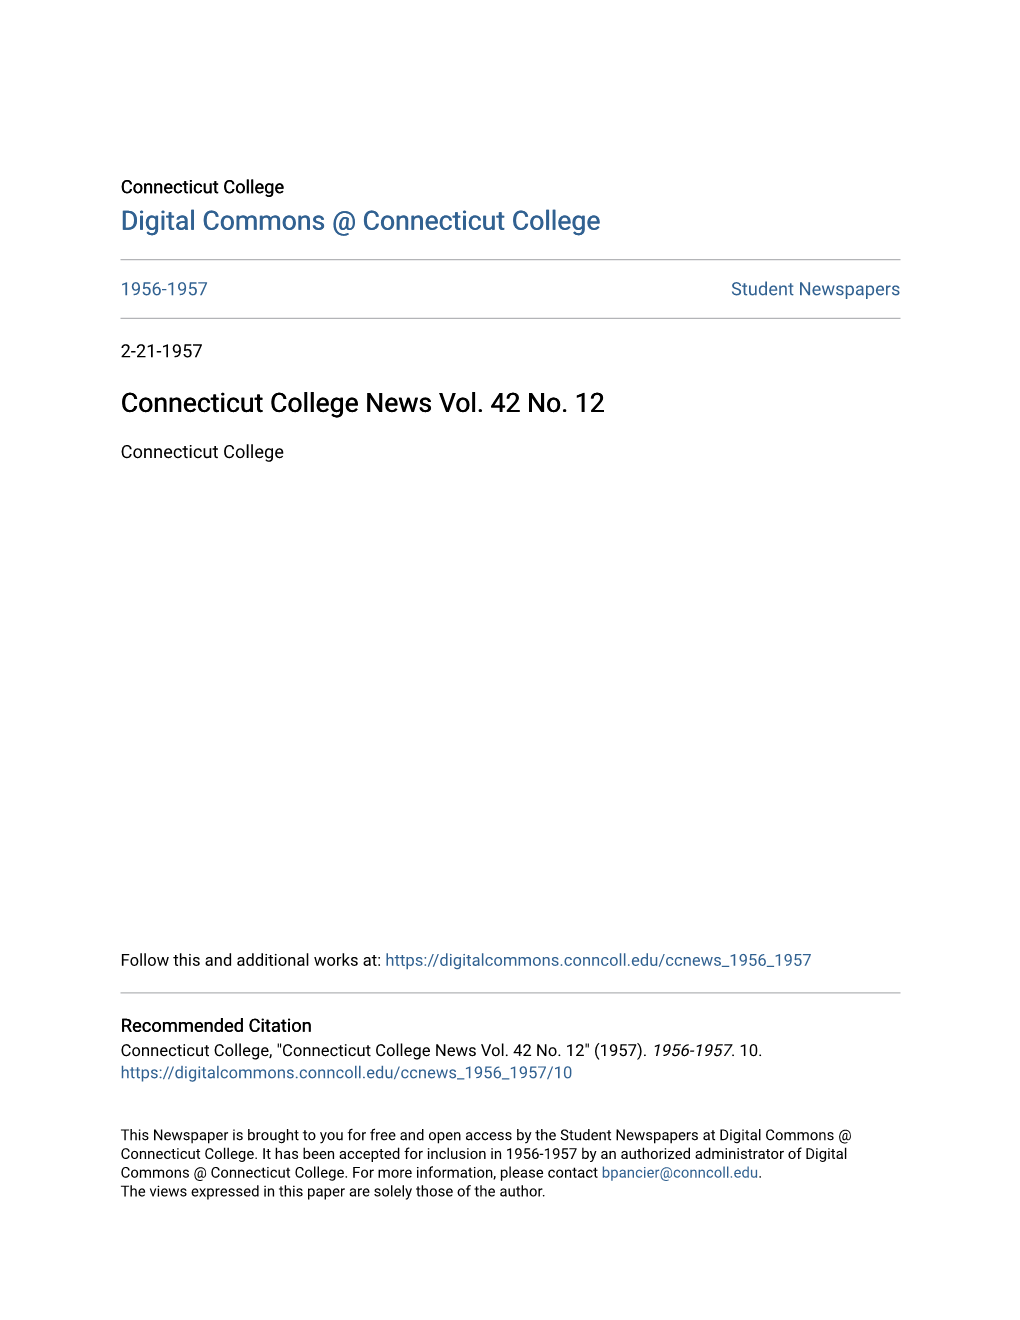 Connecticut College News Vol. 42 No. 12